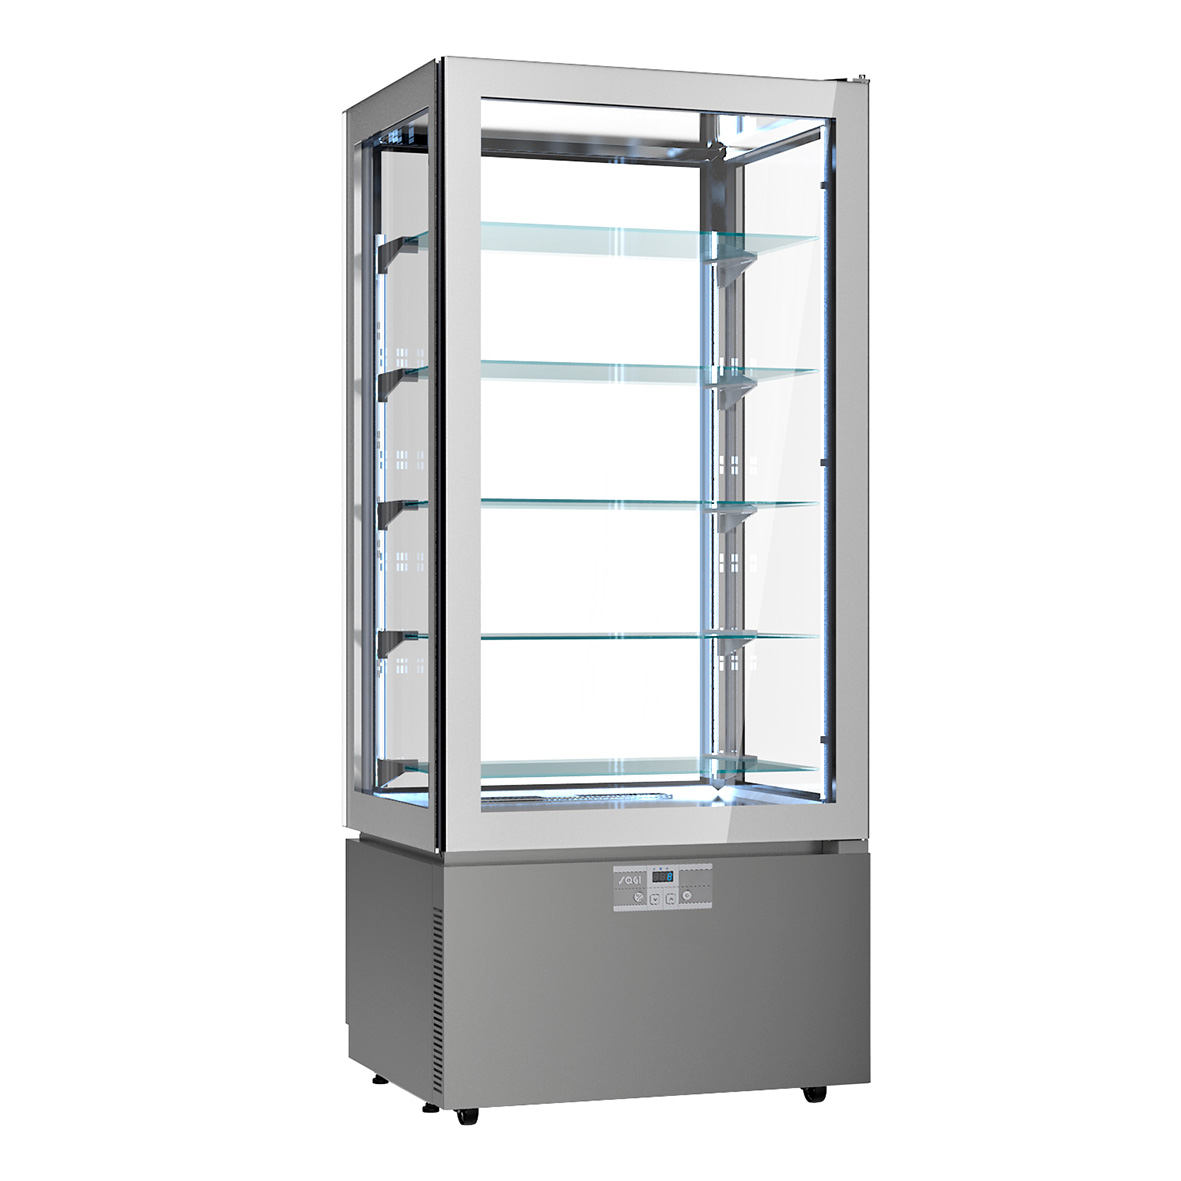 Sagi-Display-Showcase-and-Freezer-Available-In-Qatar